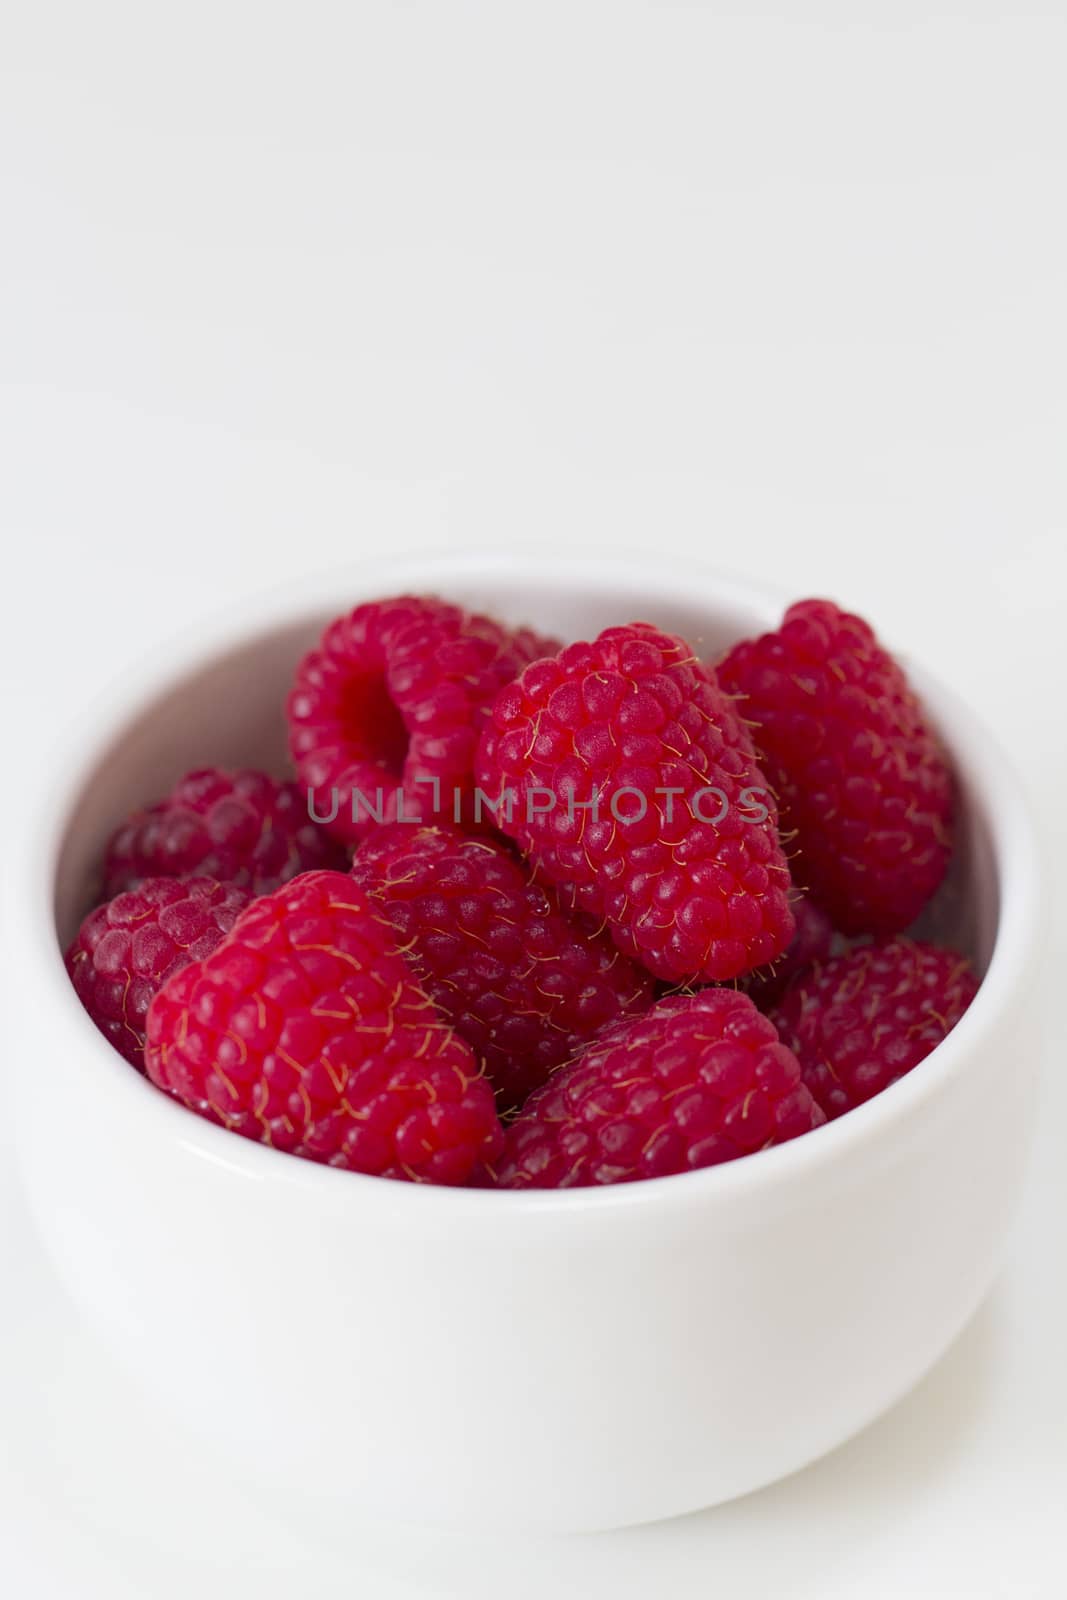 Raspberries, Rubus idaeus, in a white bowl